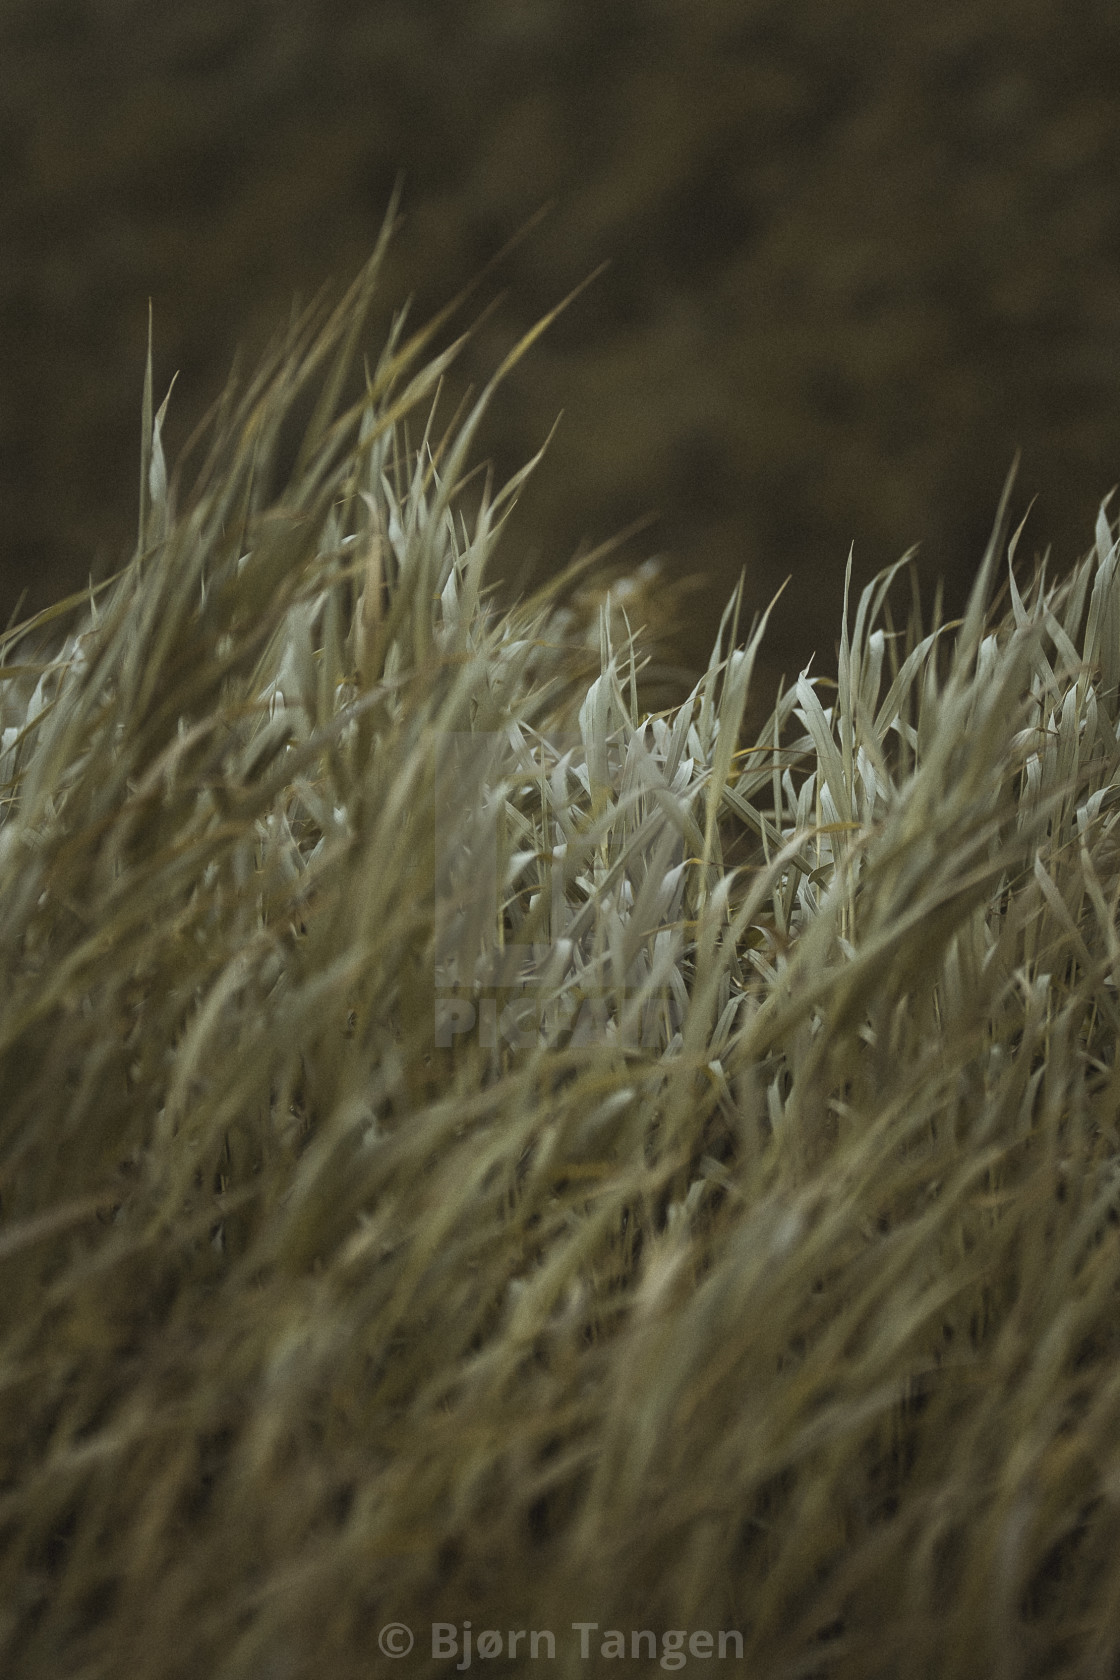 "Lofoten grass" stock image